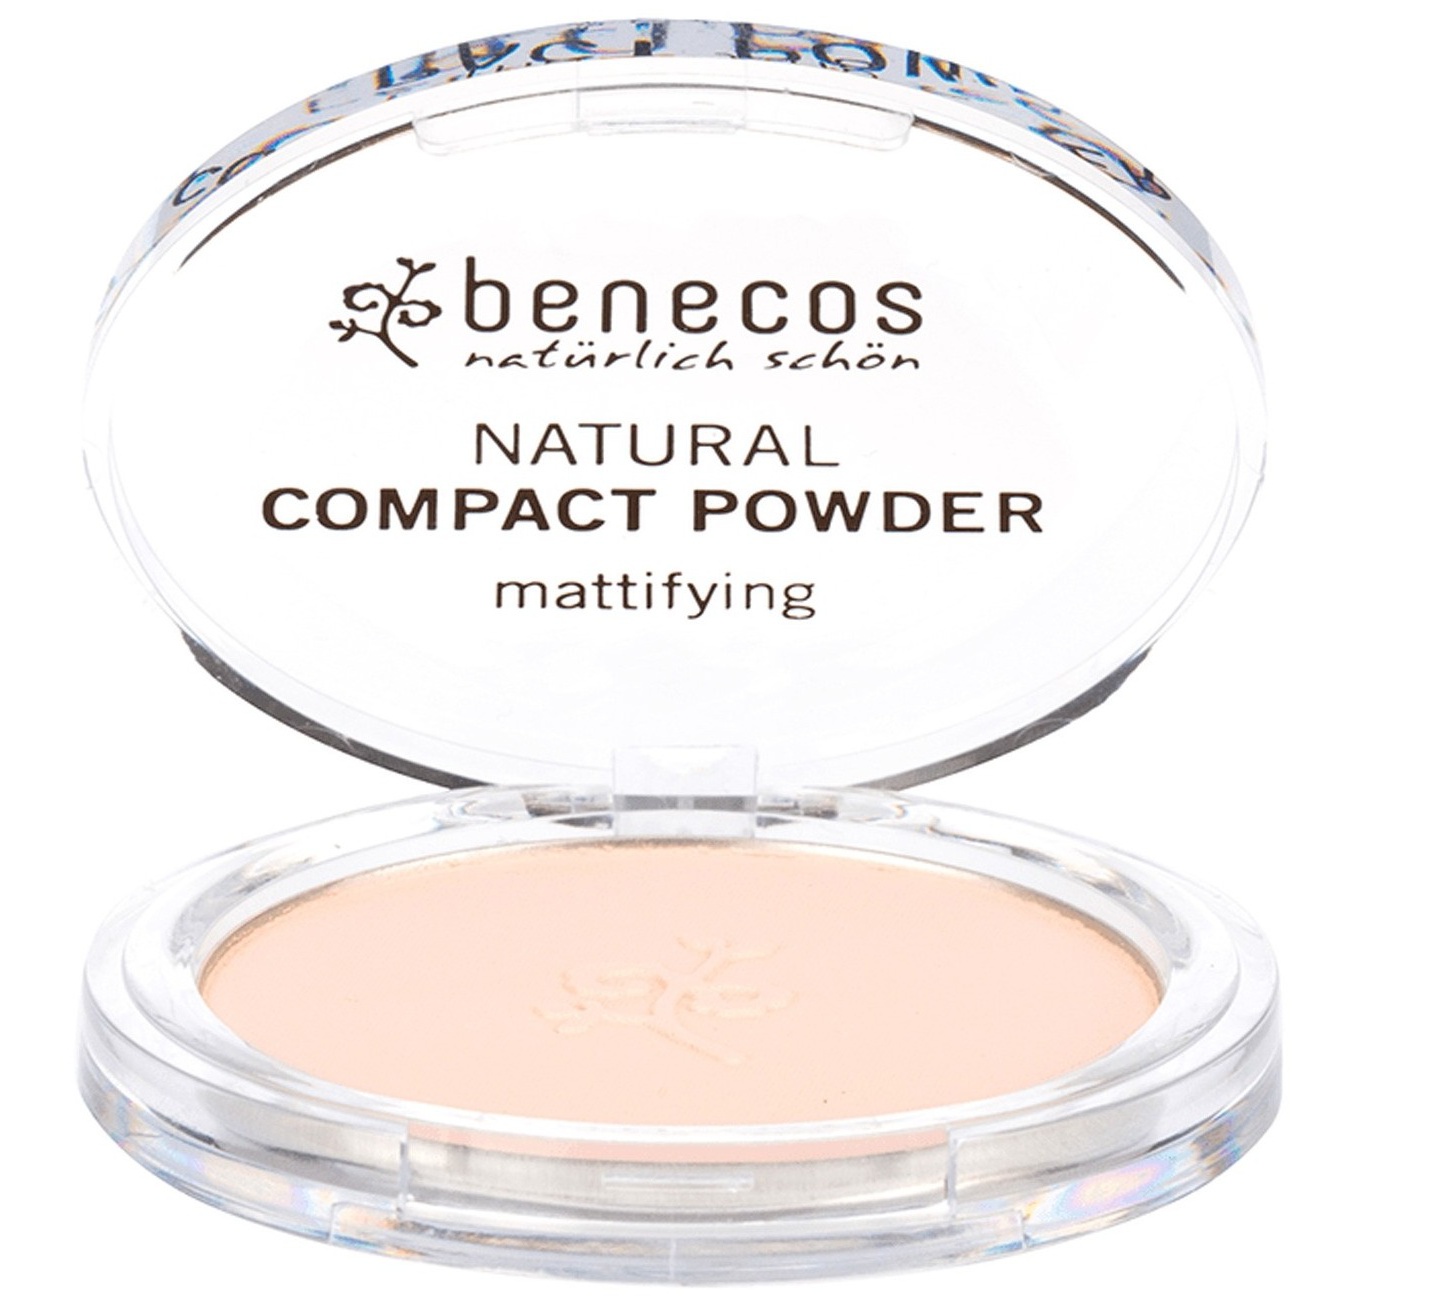 Benecos Natural Compact Powder